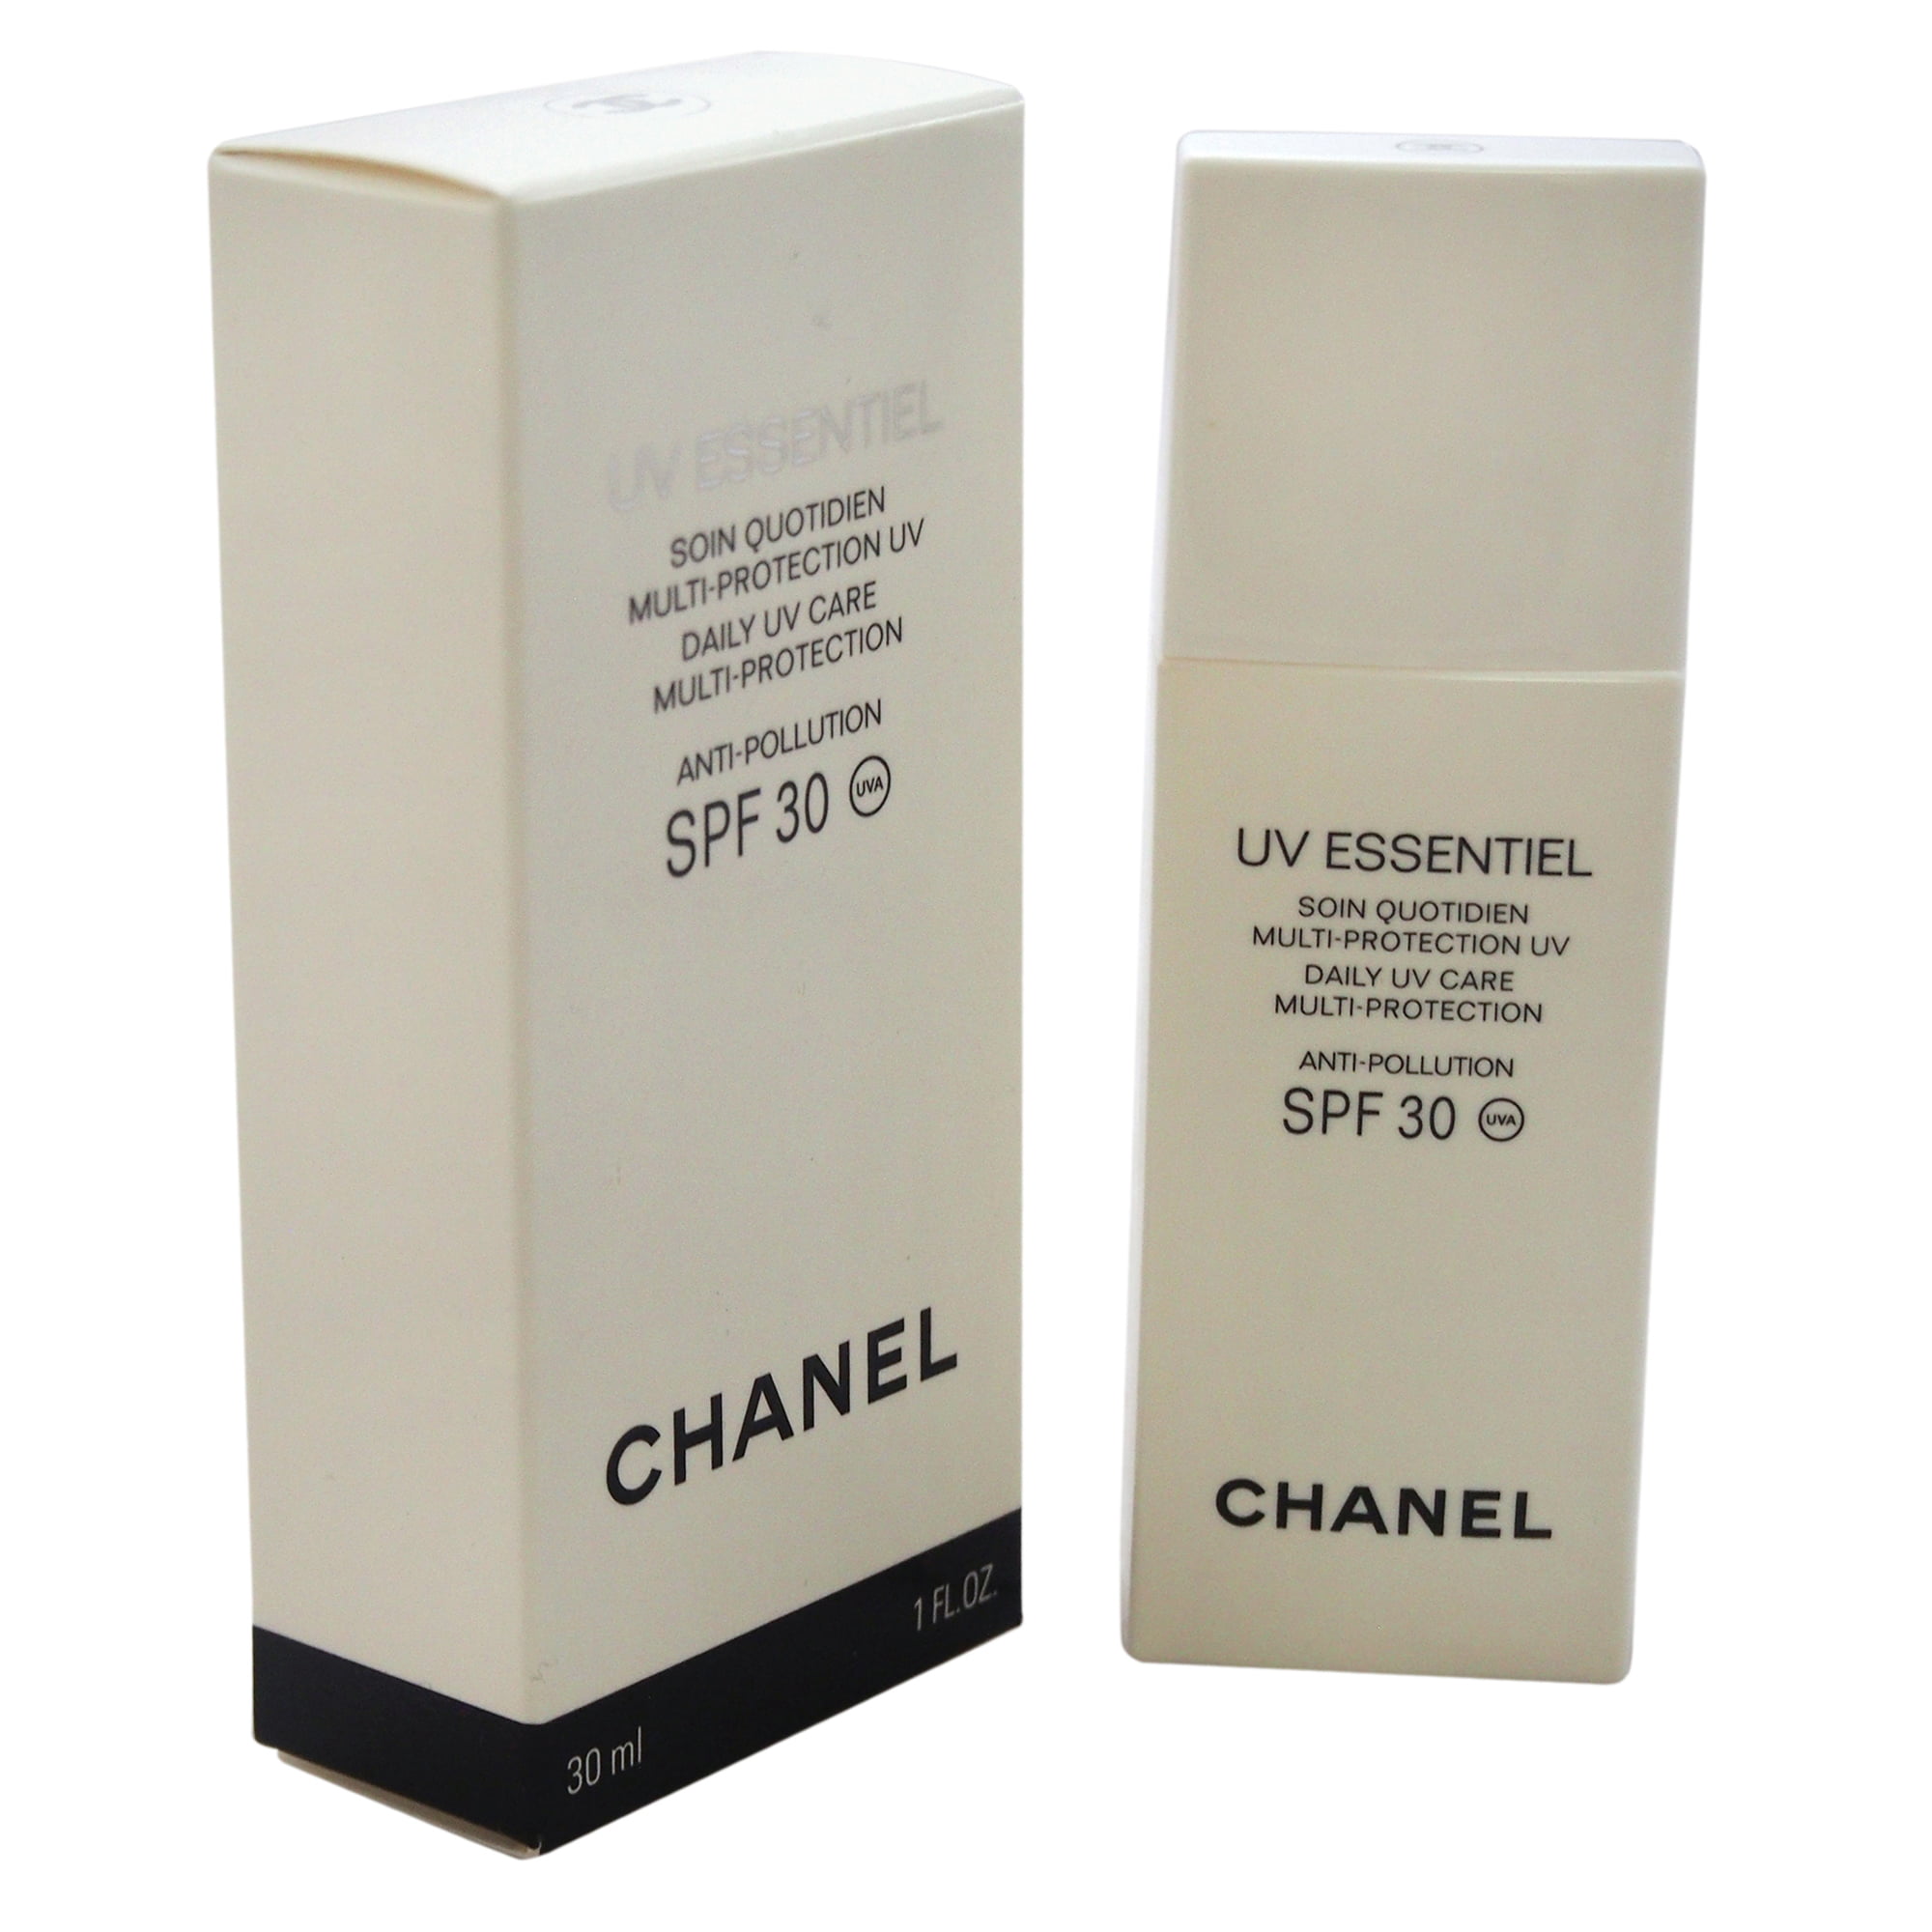 Chanel UV Essentiel Multi-Protection Daily Defender SPF 30 Sunscreen - 1 oz  